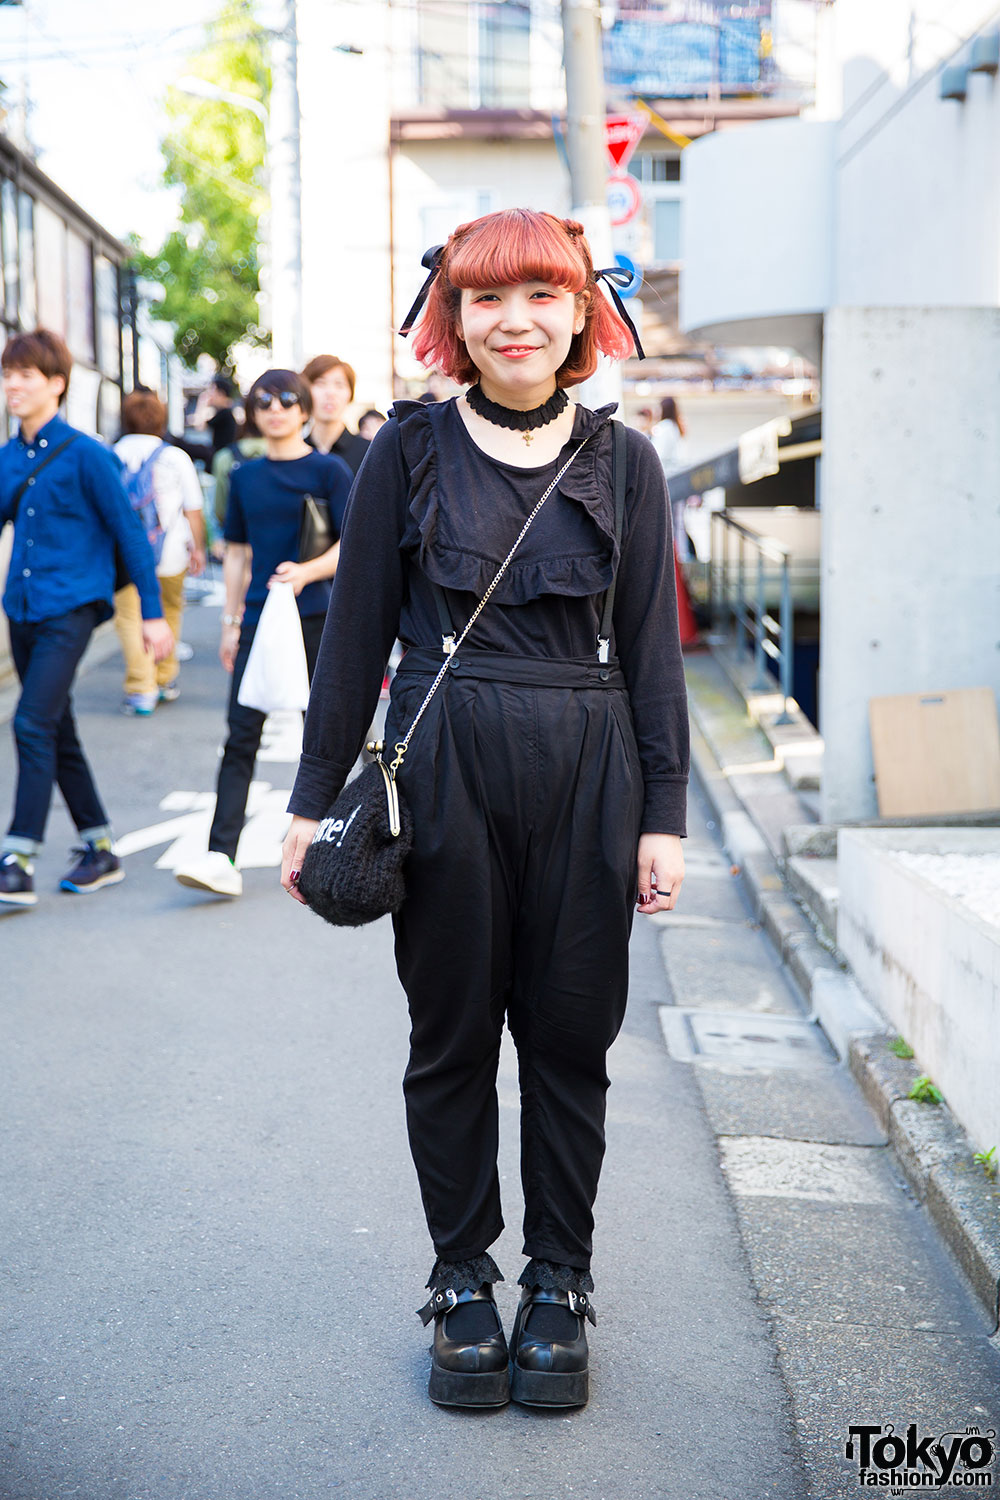 Harajuku Girl in Black Overalls, WEGO Mary-Janes, Lace Choker & [me ...